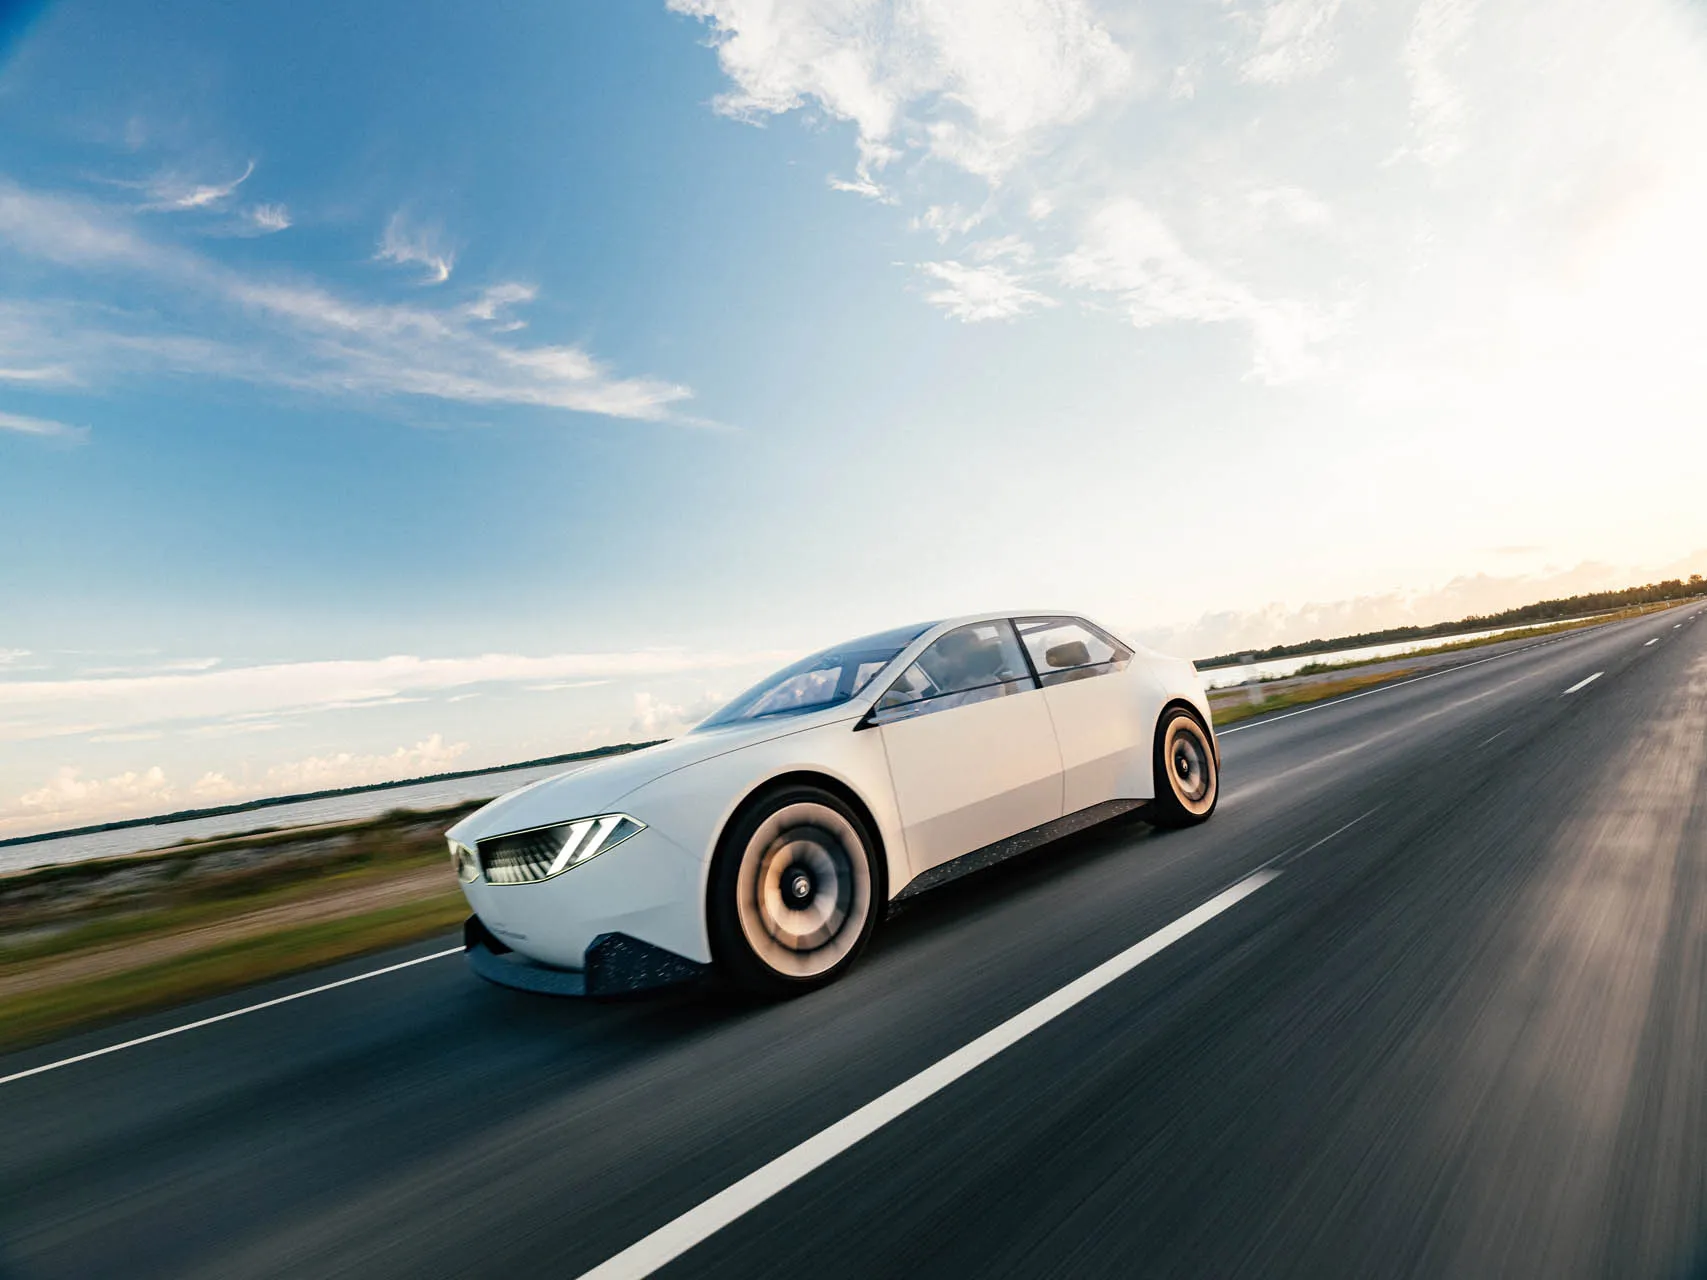 BMW Imaginative and prescient Neue Klasse previews next-gen EVs due from 2025